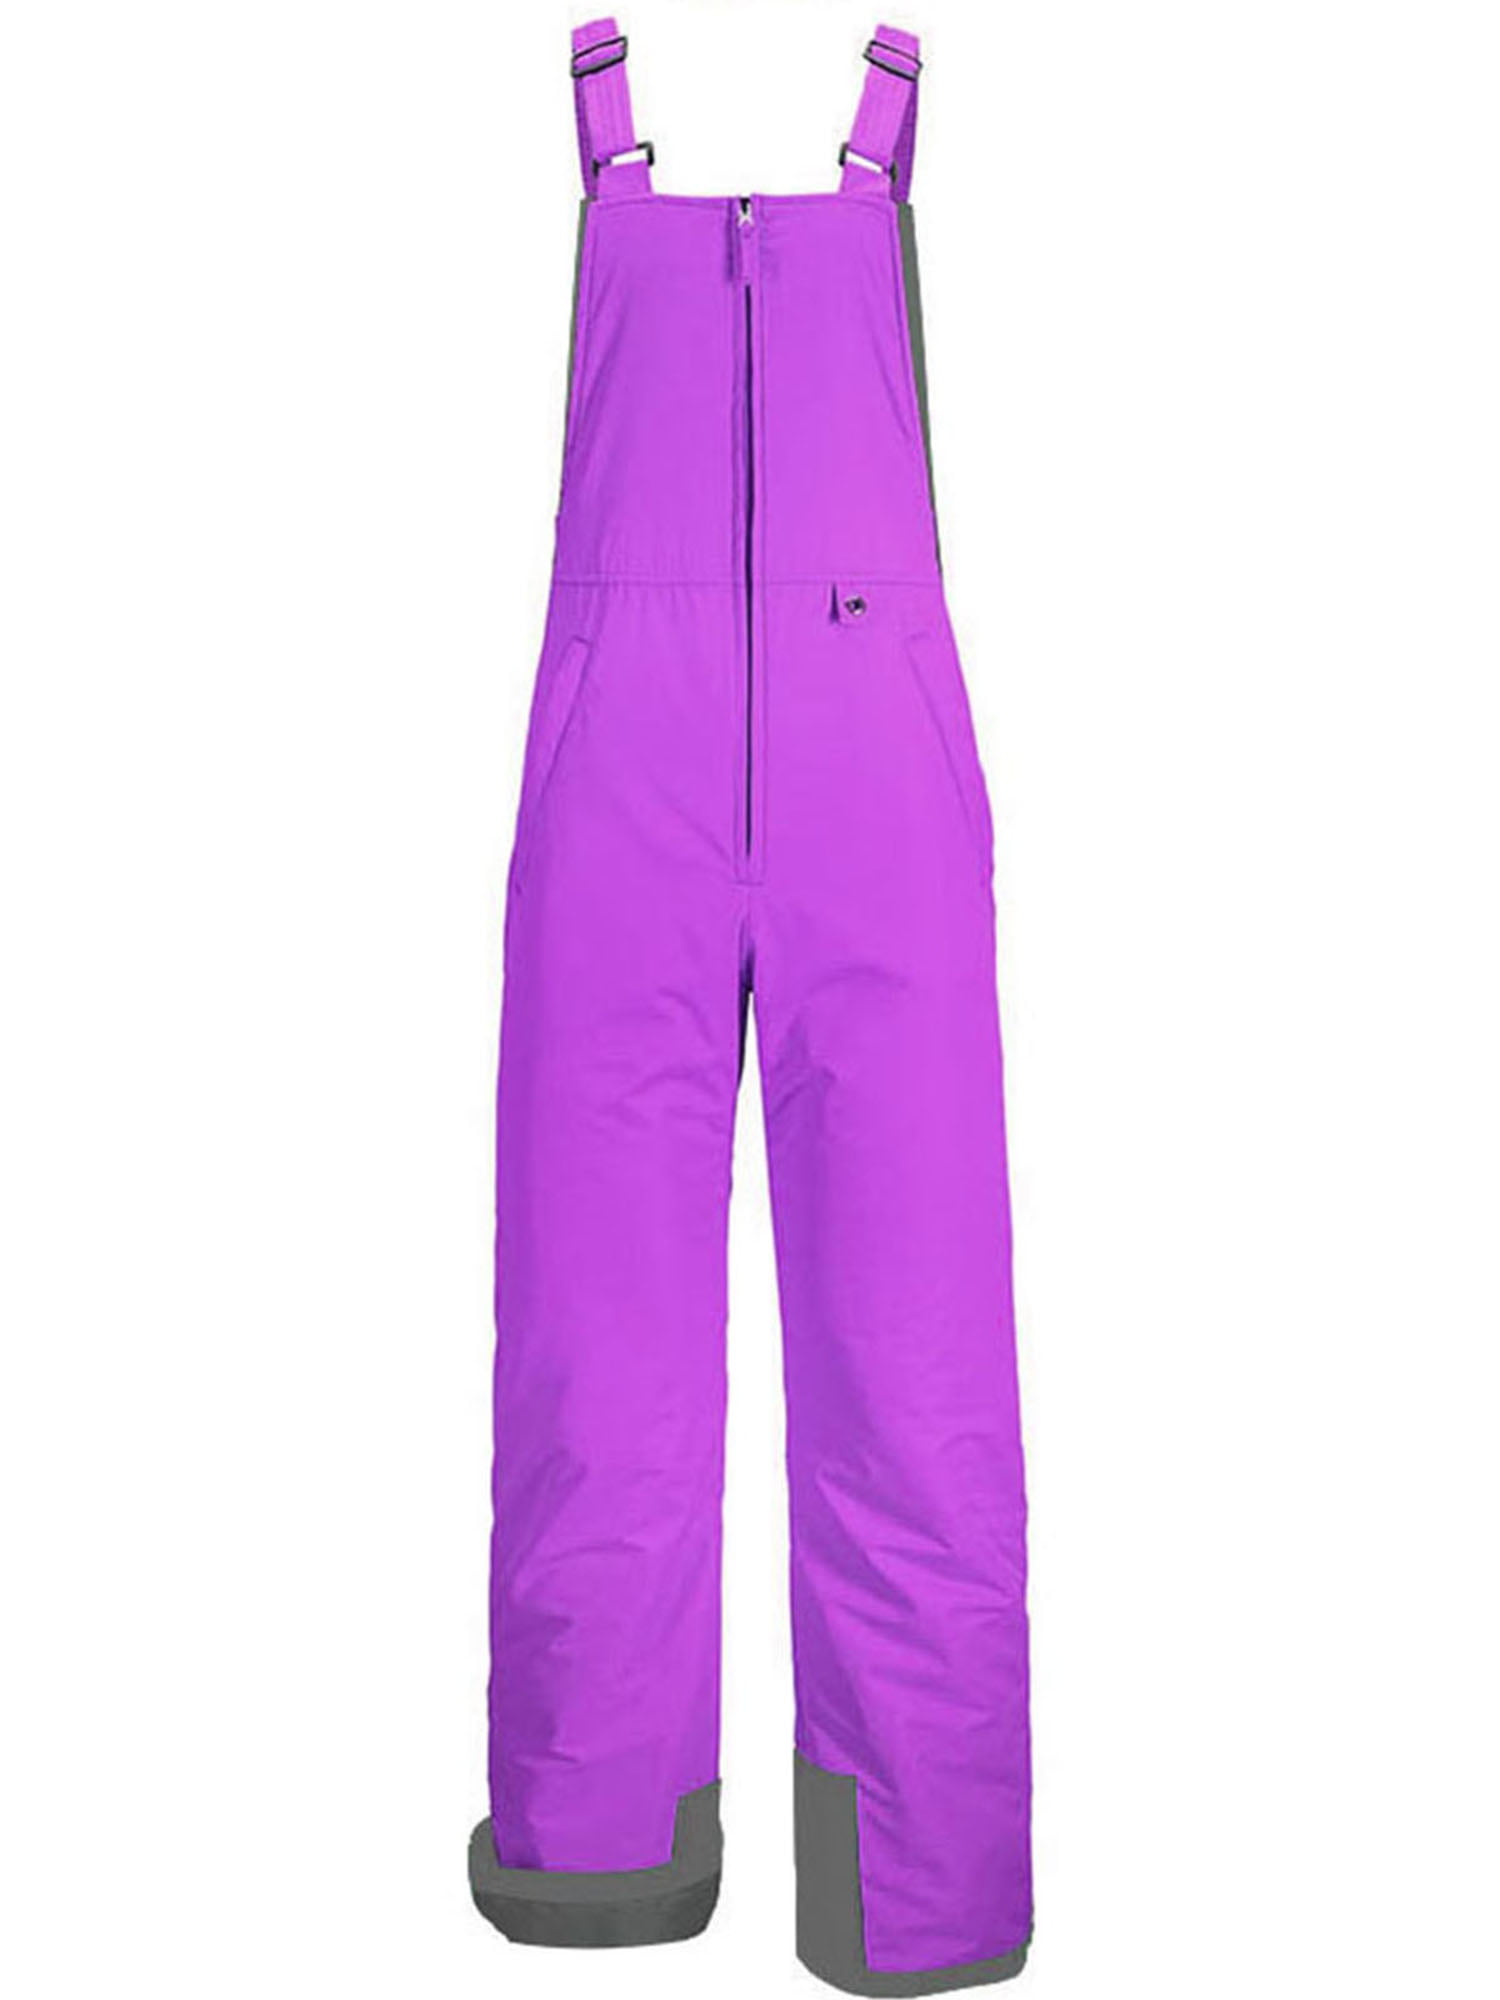 Men's Outdoor Waterproof Windproof Ski Snow Pants Overalls Trousers Salopettes 